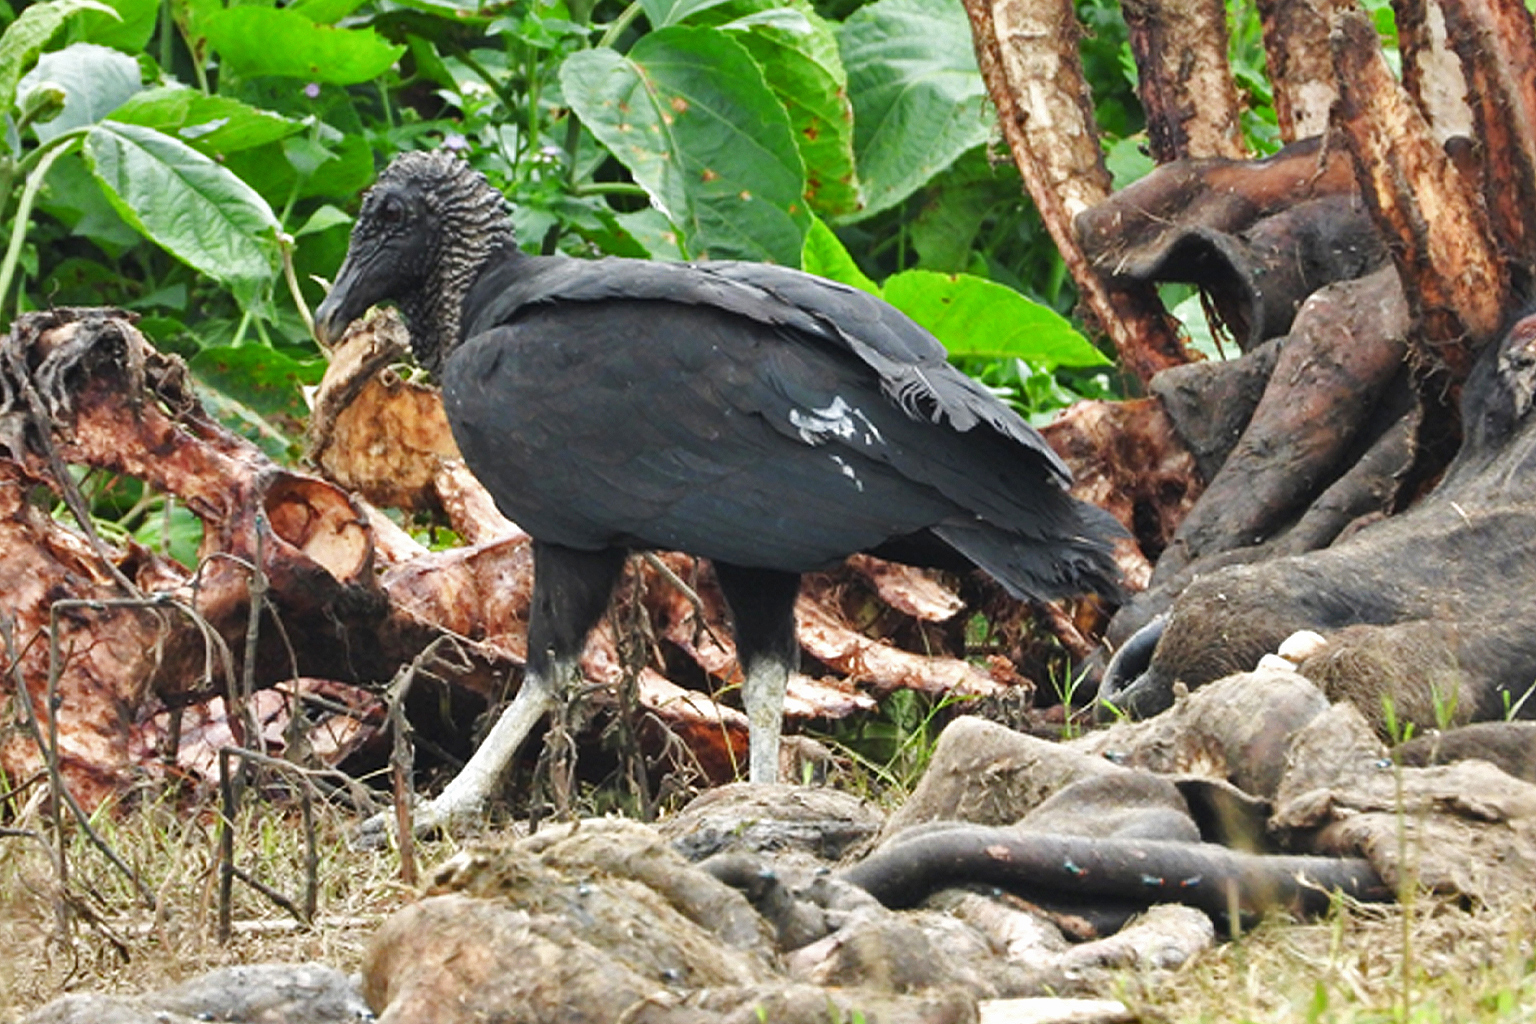 The black vulture feeding on a carcass.